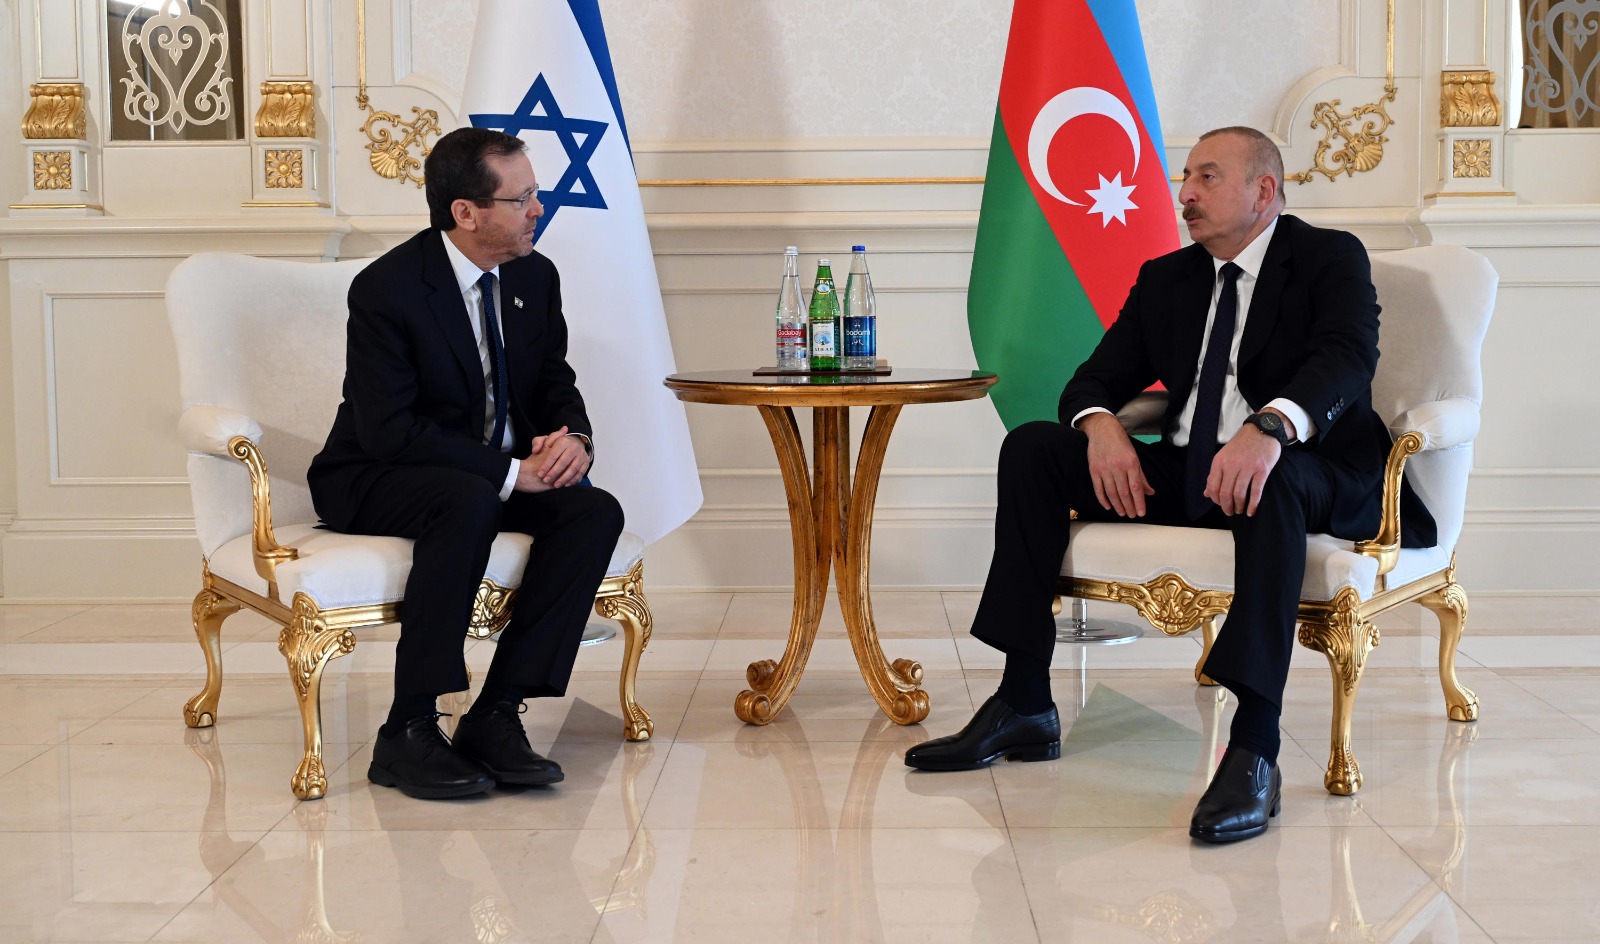 Israel's president in Baku to further strategic partnership